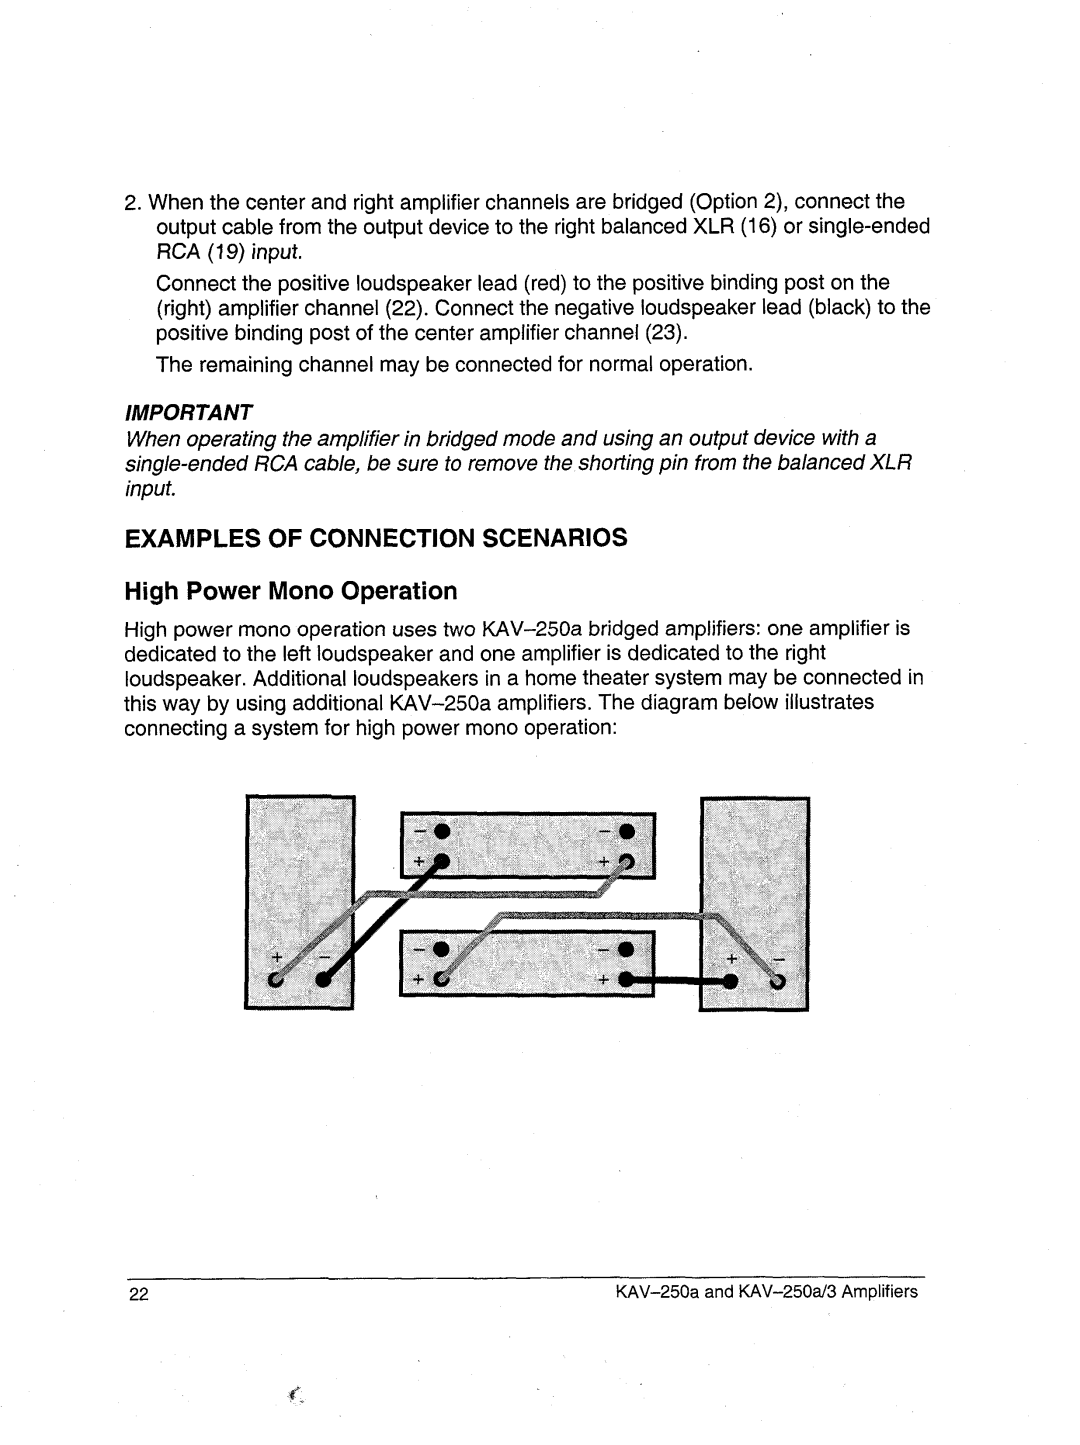 Krell Industries KAV-250a/3 manual Examplesof Connectionscenarios, High PowerMonoOperation, input 